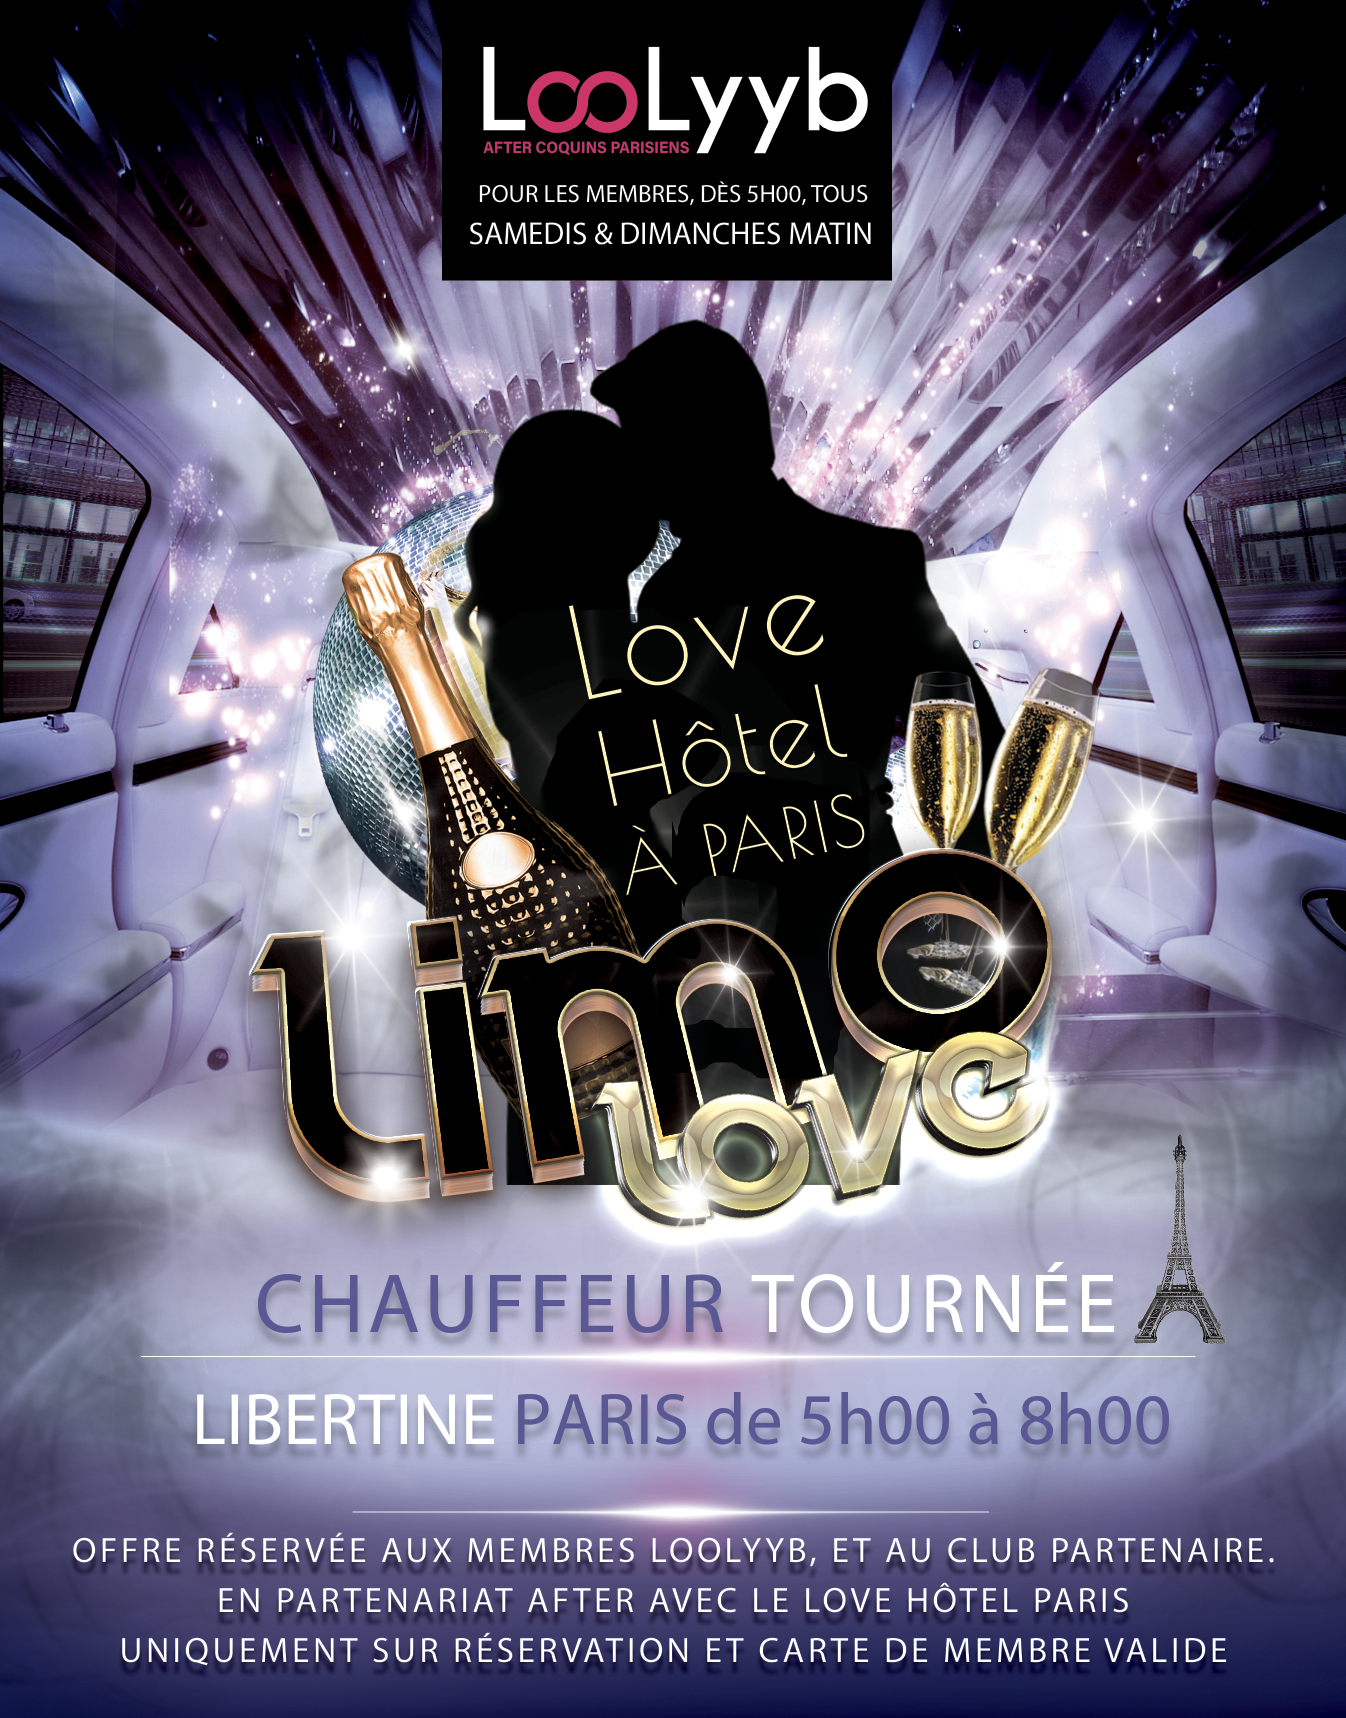 limousine love libertins paris